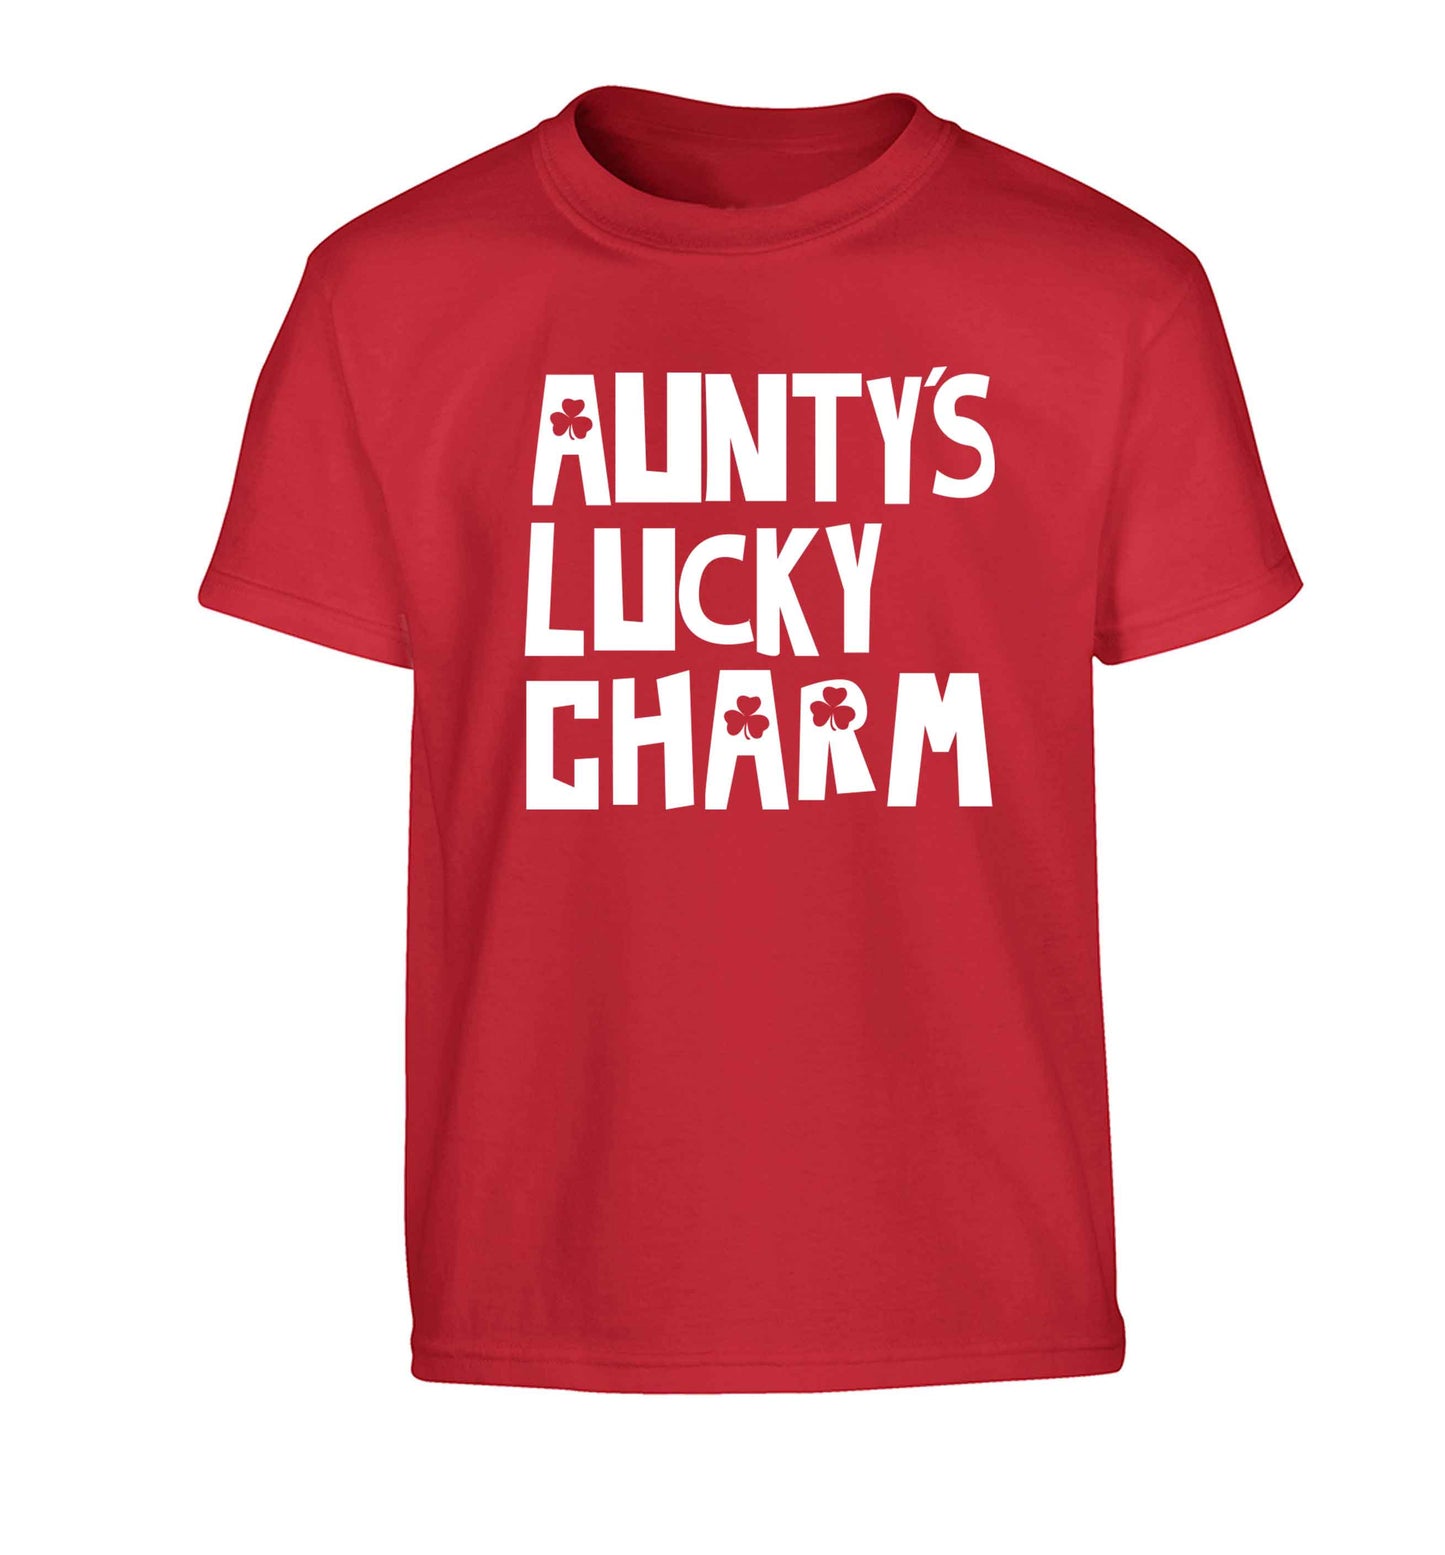 Aunty's lucky charm Children's red Tshirt 12-13 Years